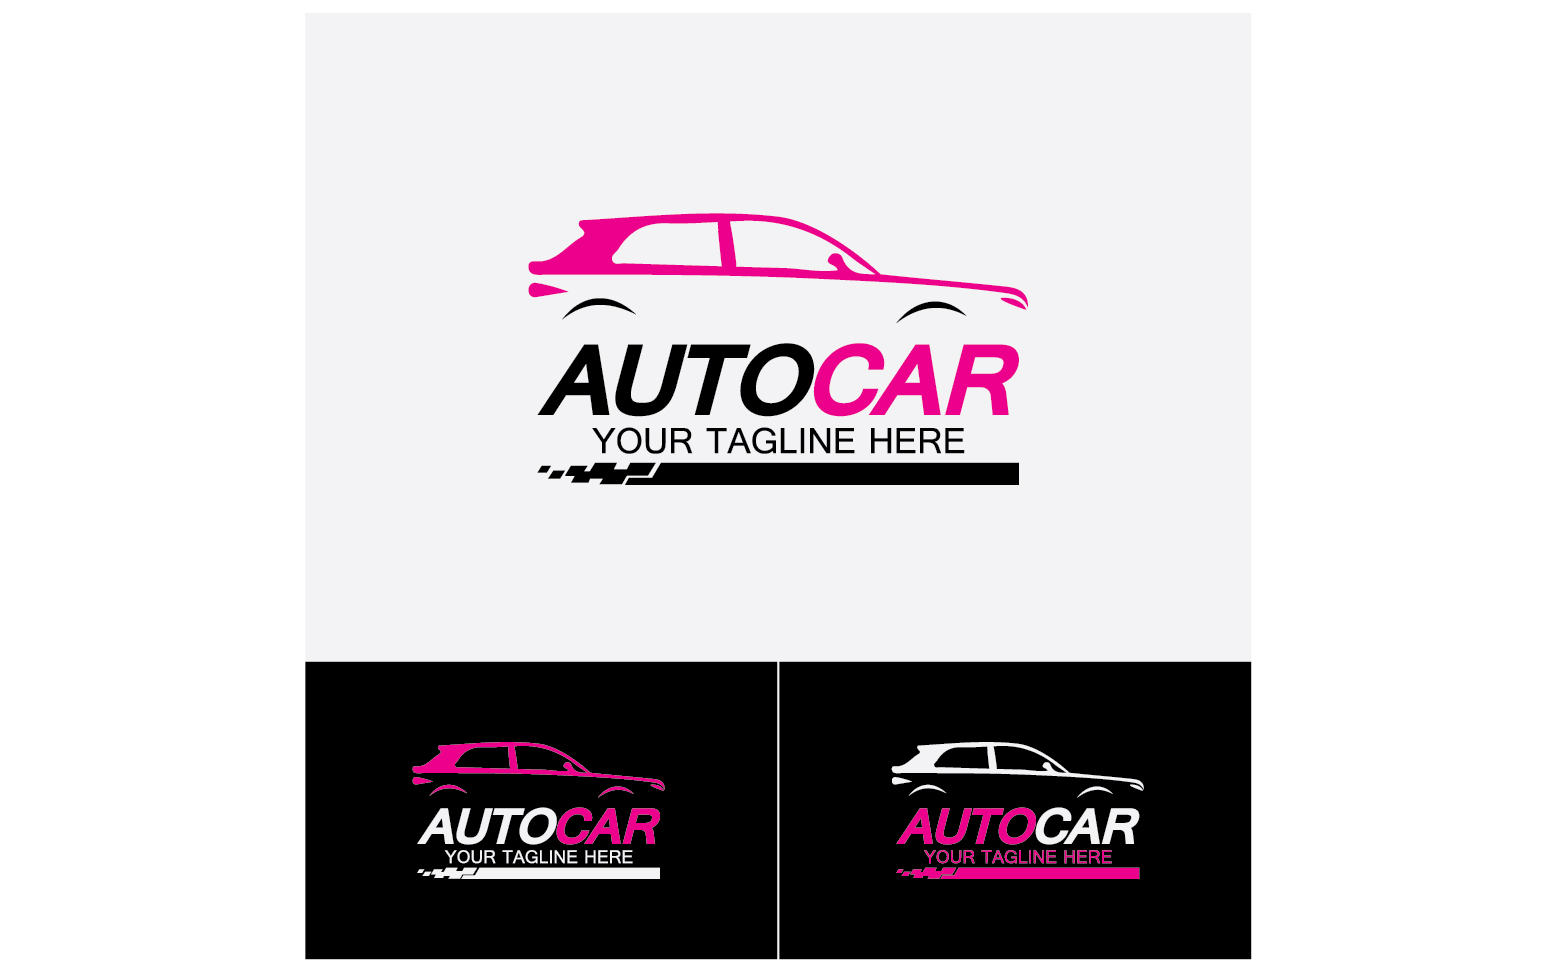 Cars dealer, automotive, autocar logo design inspiration. v37